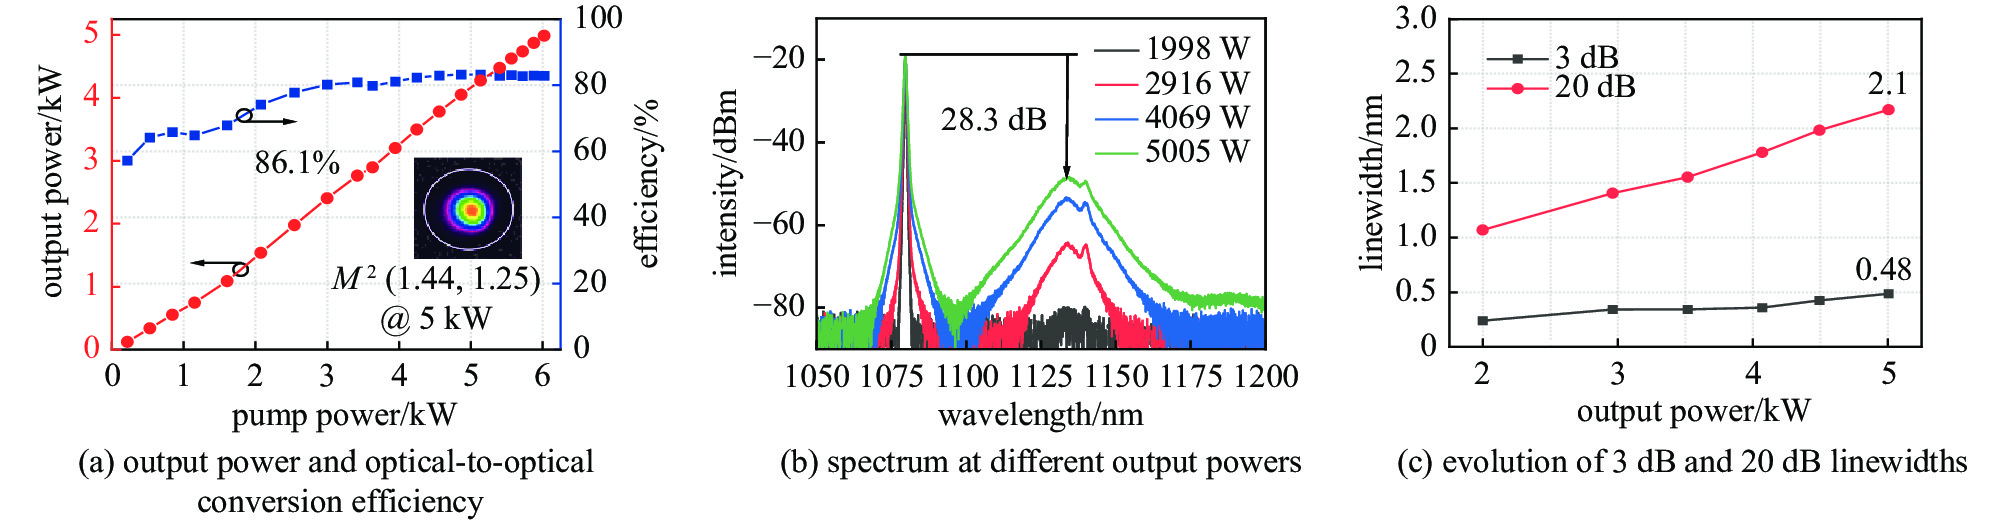 Laser performance of the narrow linewidth fiber amplifier